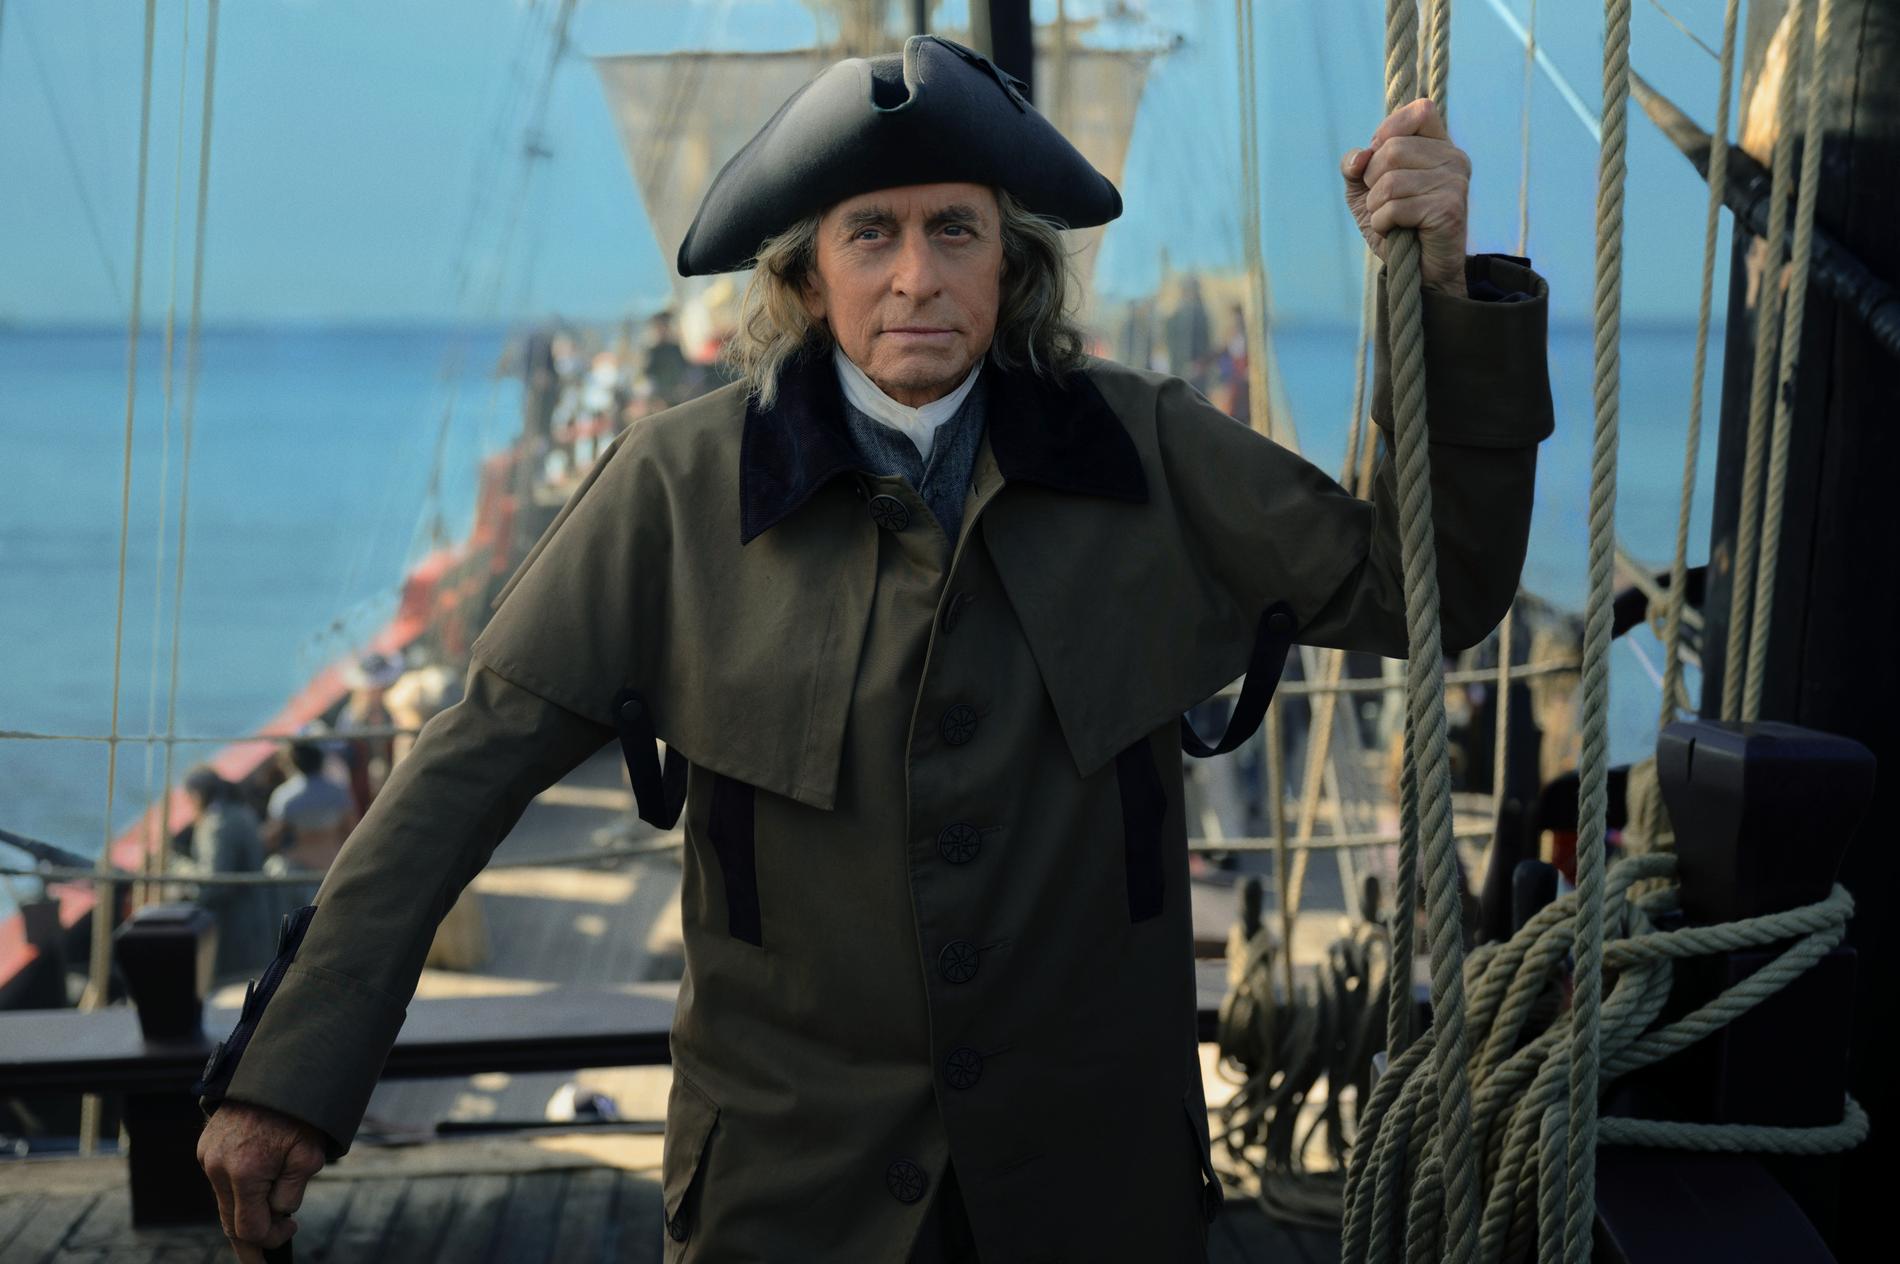 Michael Douglas spelar Benjamin Franklin, en av USA:s grundare, i en ny miniserie. Pressbild.